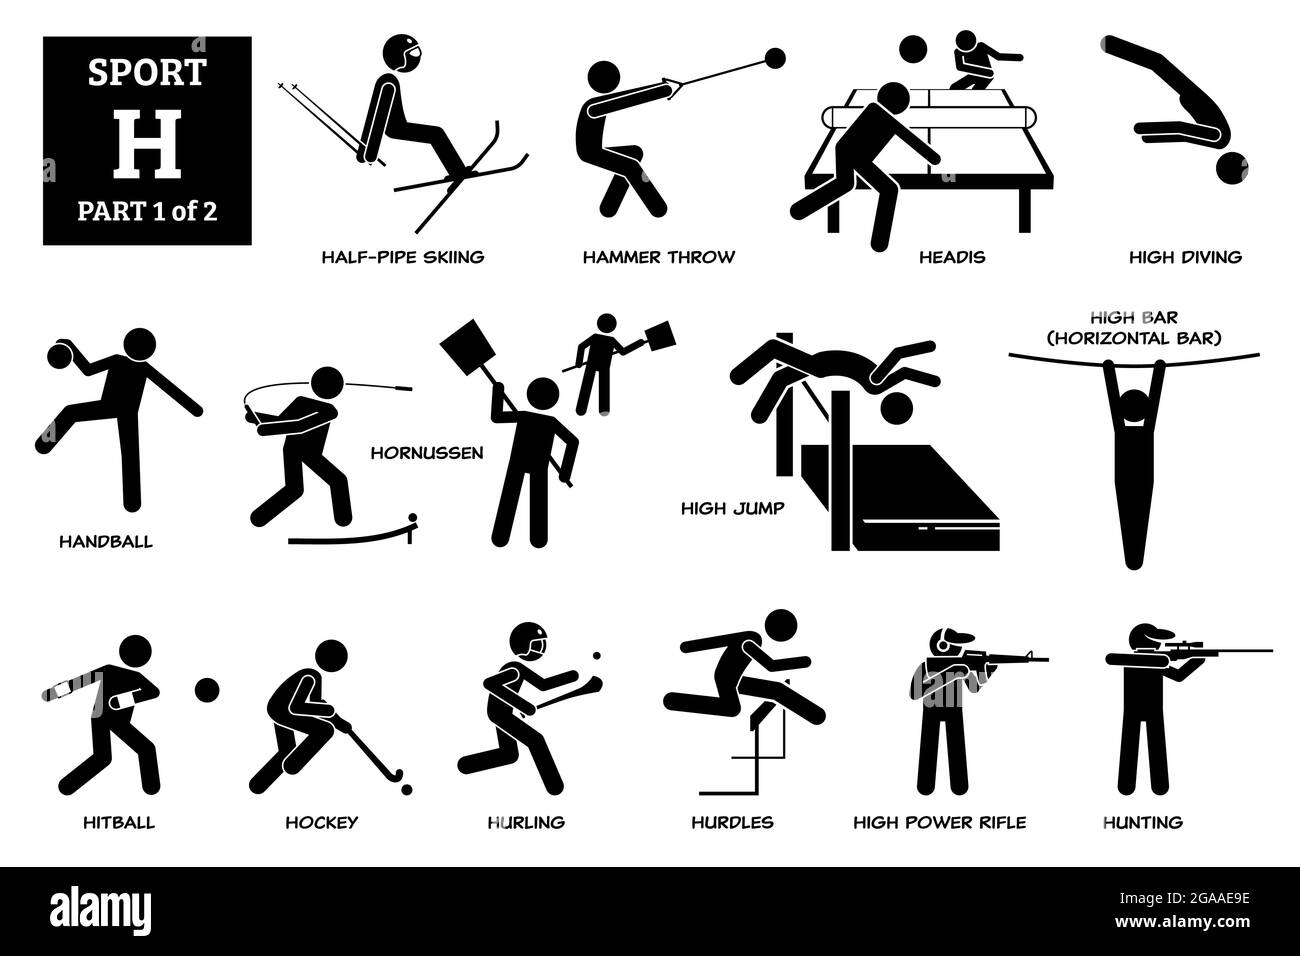 Sport games alphabet H vector icons pictogram. Half-pipe skiing, hammer throw, headis, high diving, handball, hornussen, high jump, horizontal high ba Stock Vector